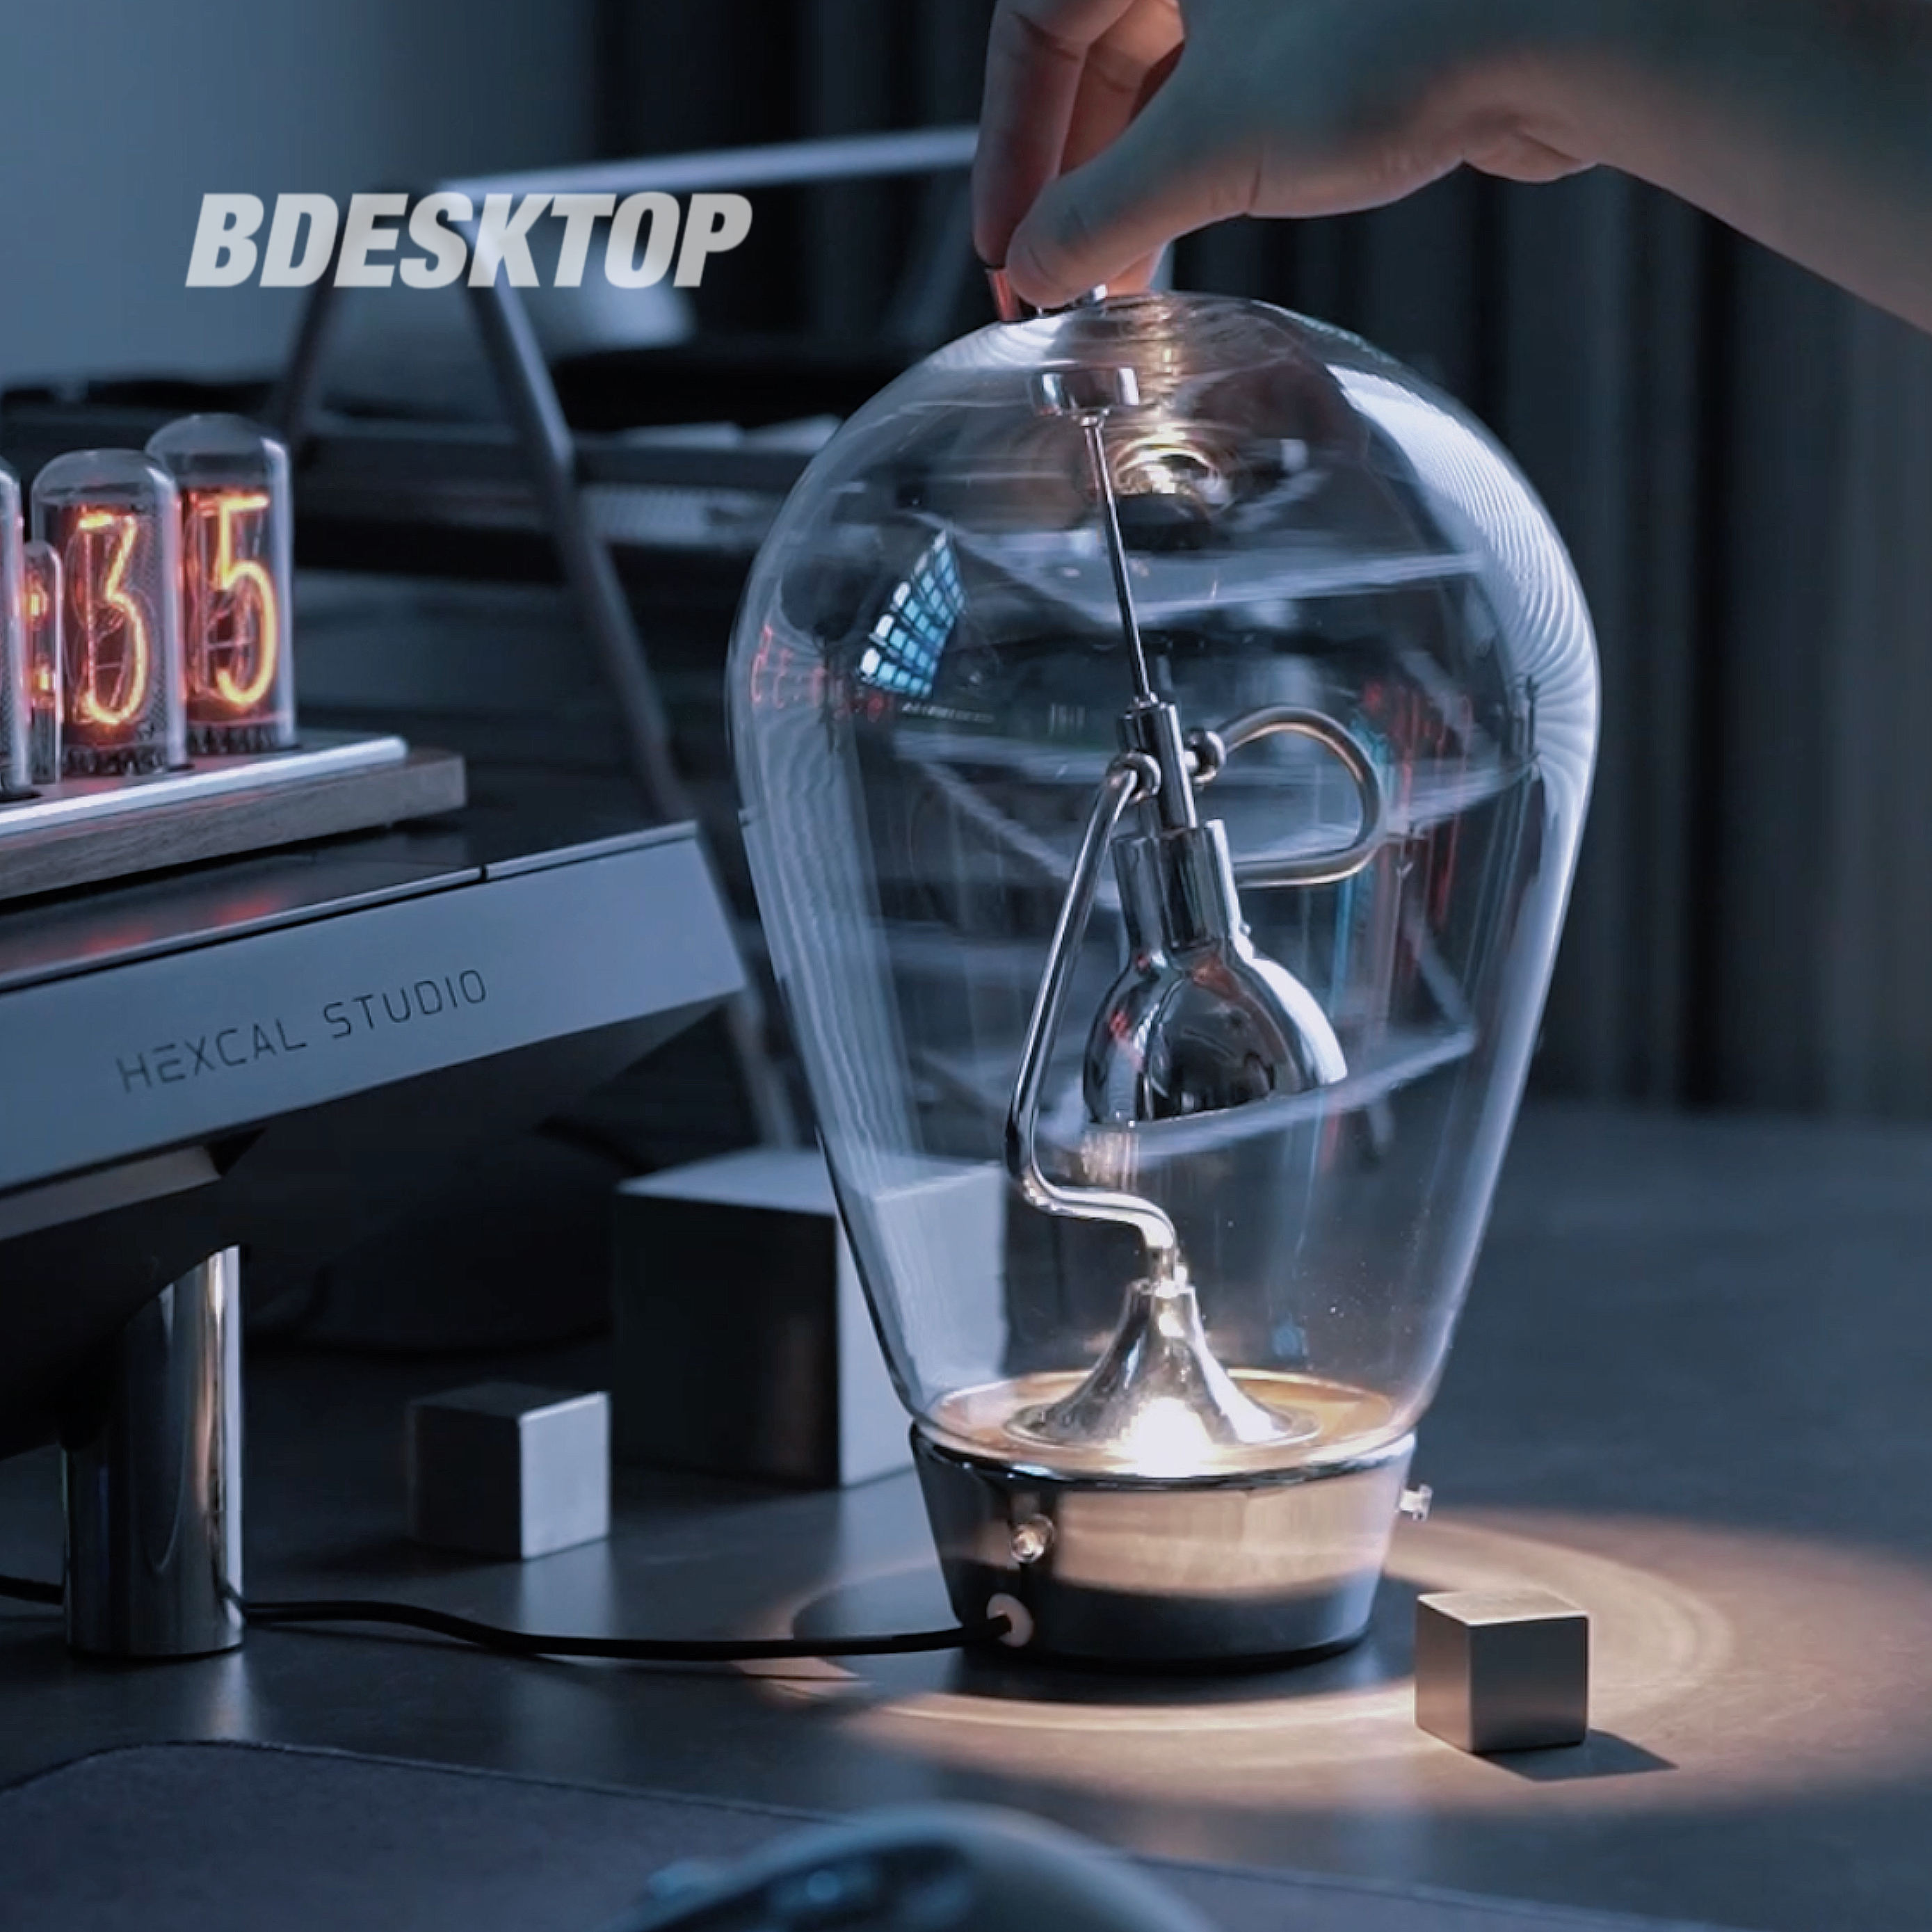 Bdesktop Design Shop | Industrial creative design office desk and bedroom bedside touch dimming lamp